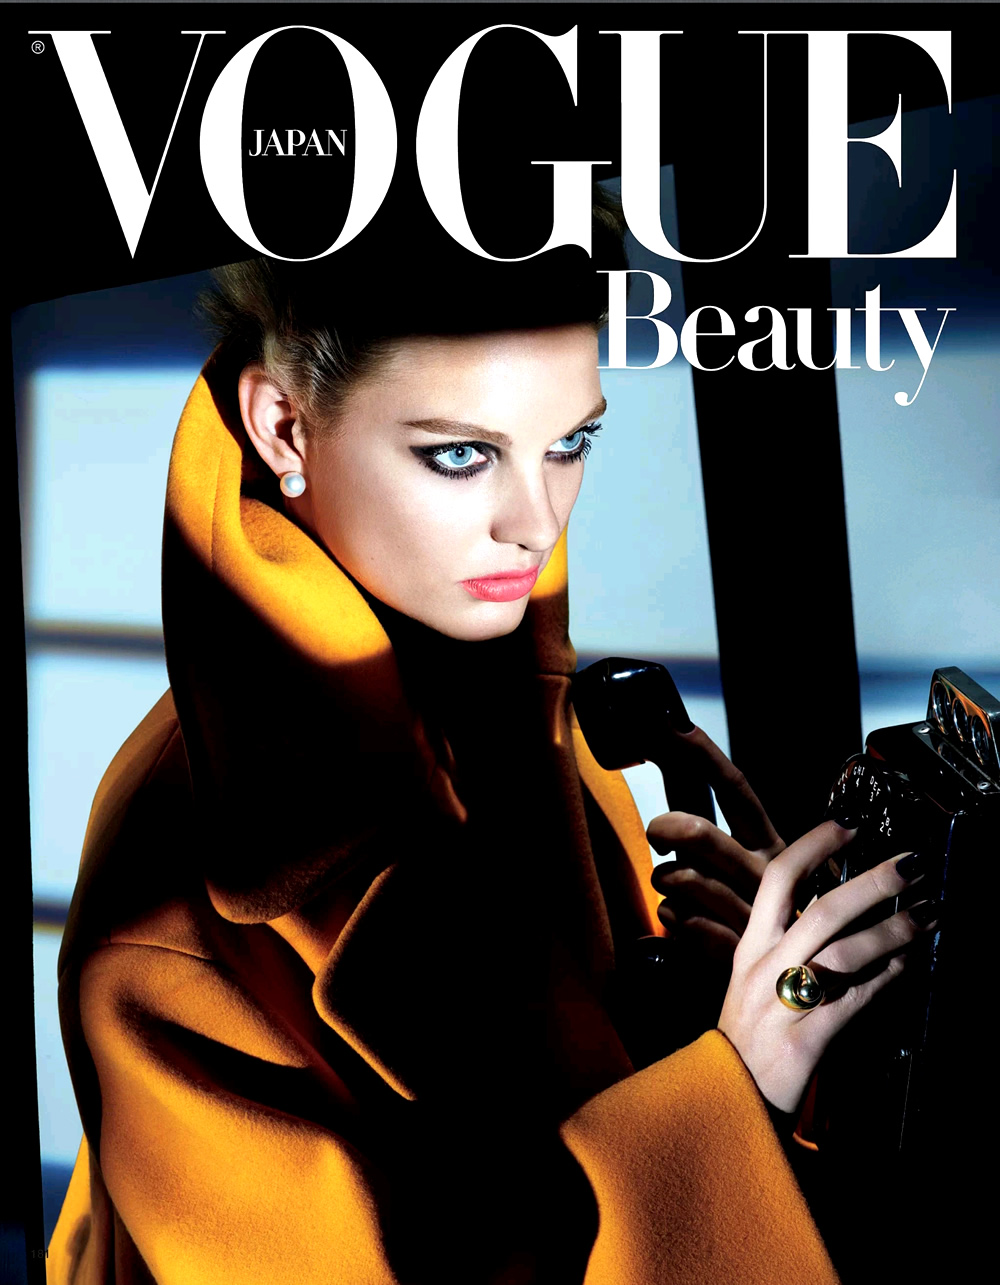 Patricia van der Vliet by Lacey for Vogue Japan September 2013